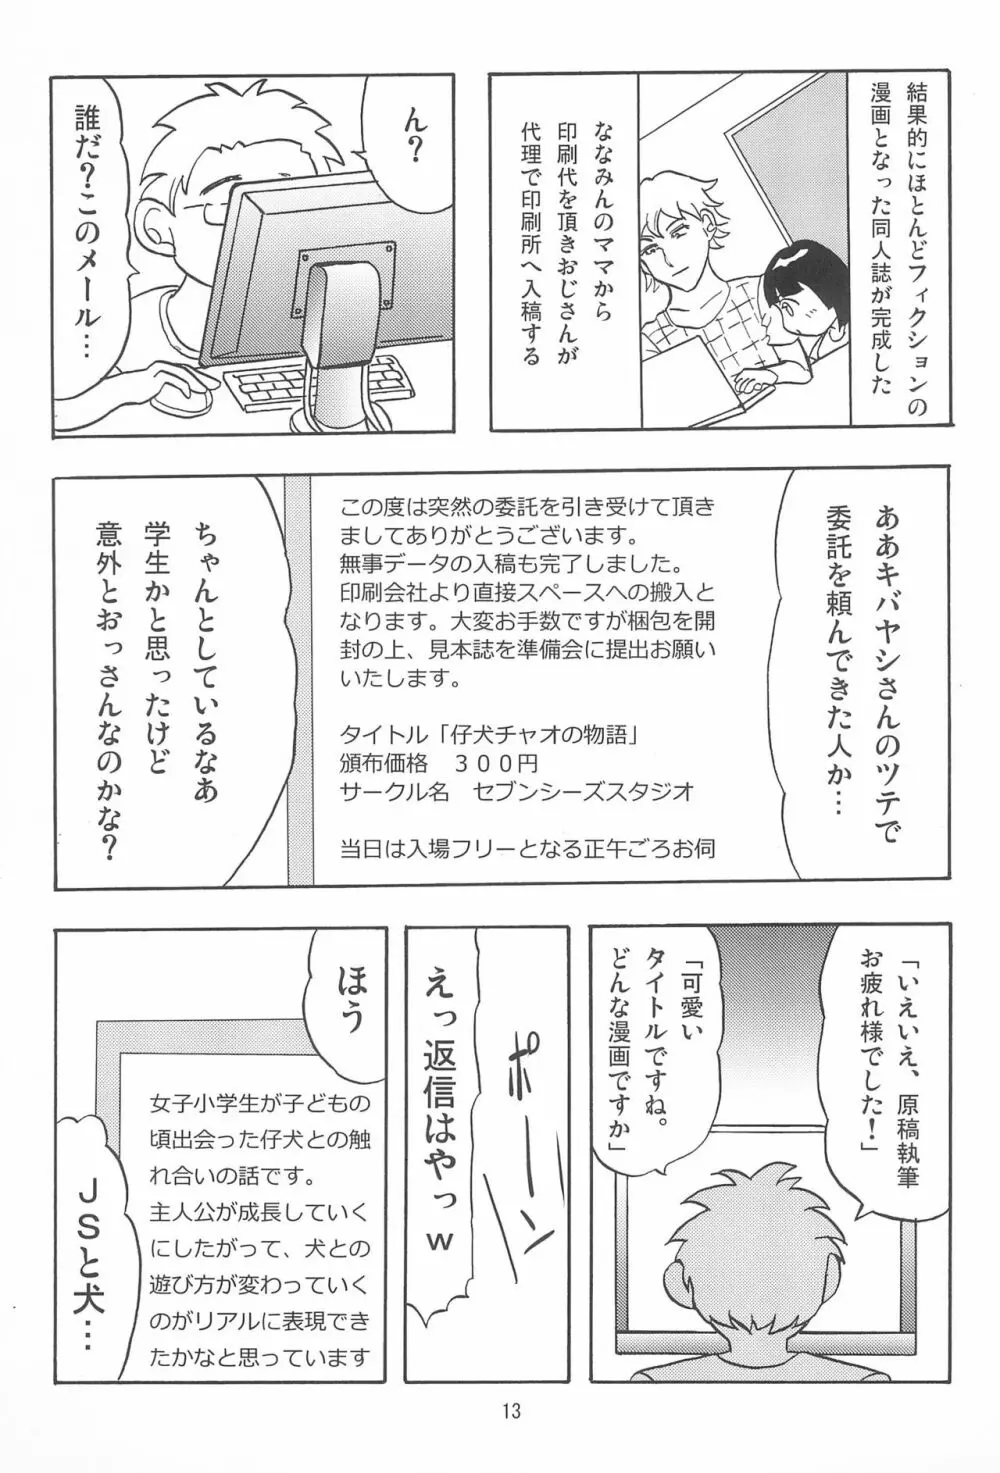 女子小学生日記11 - page13